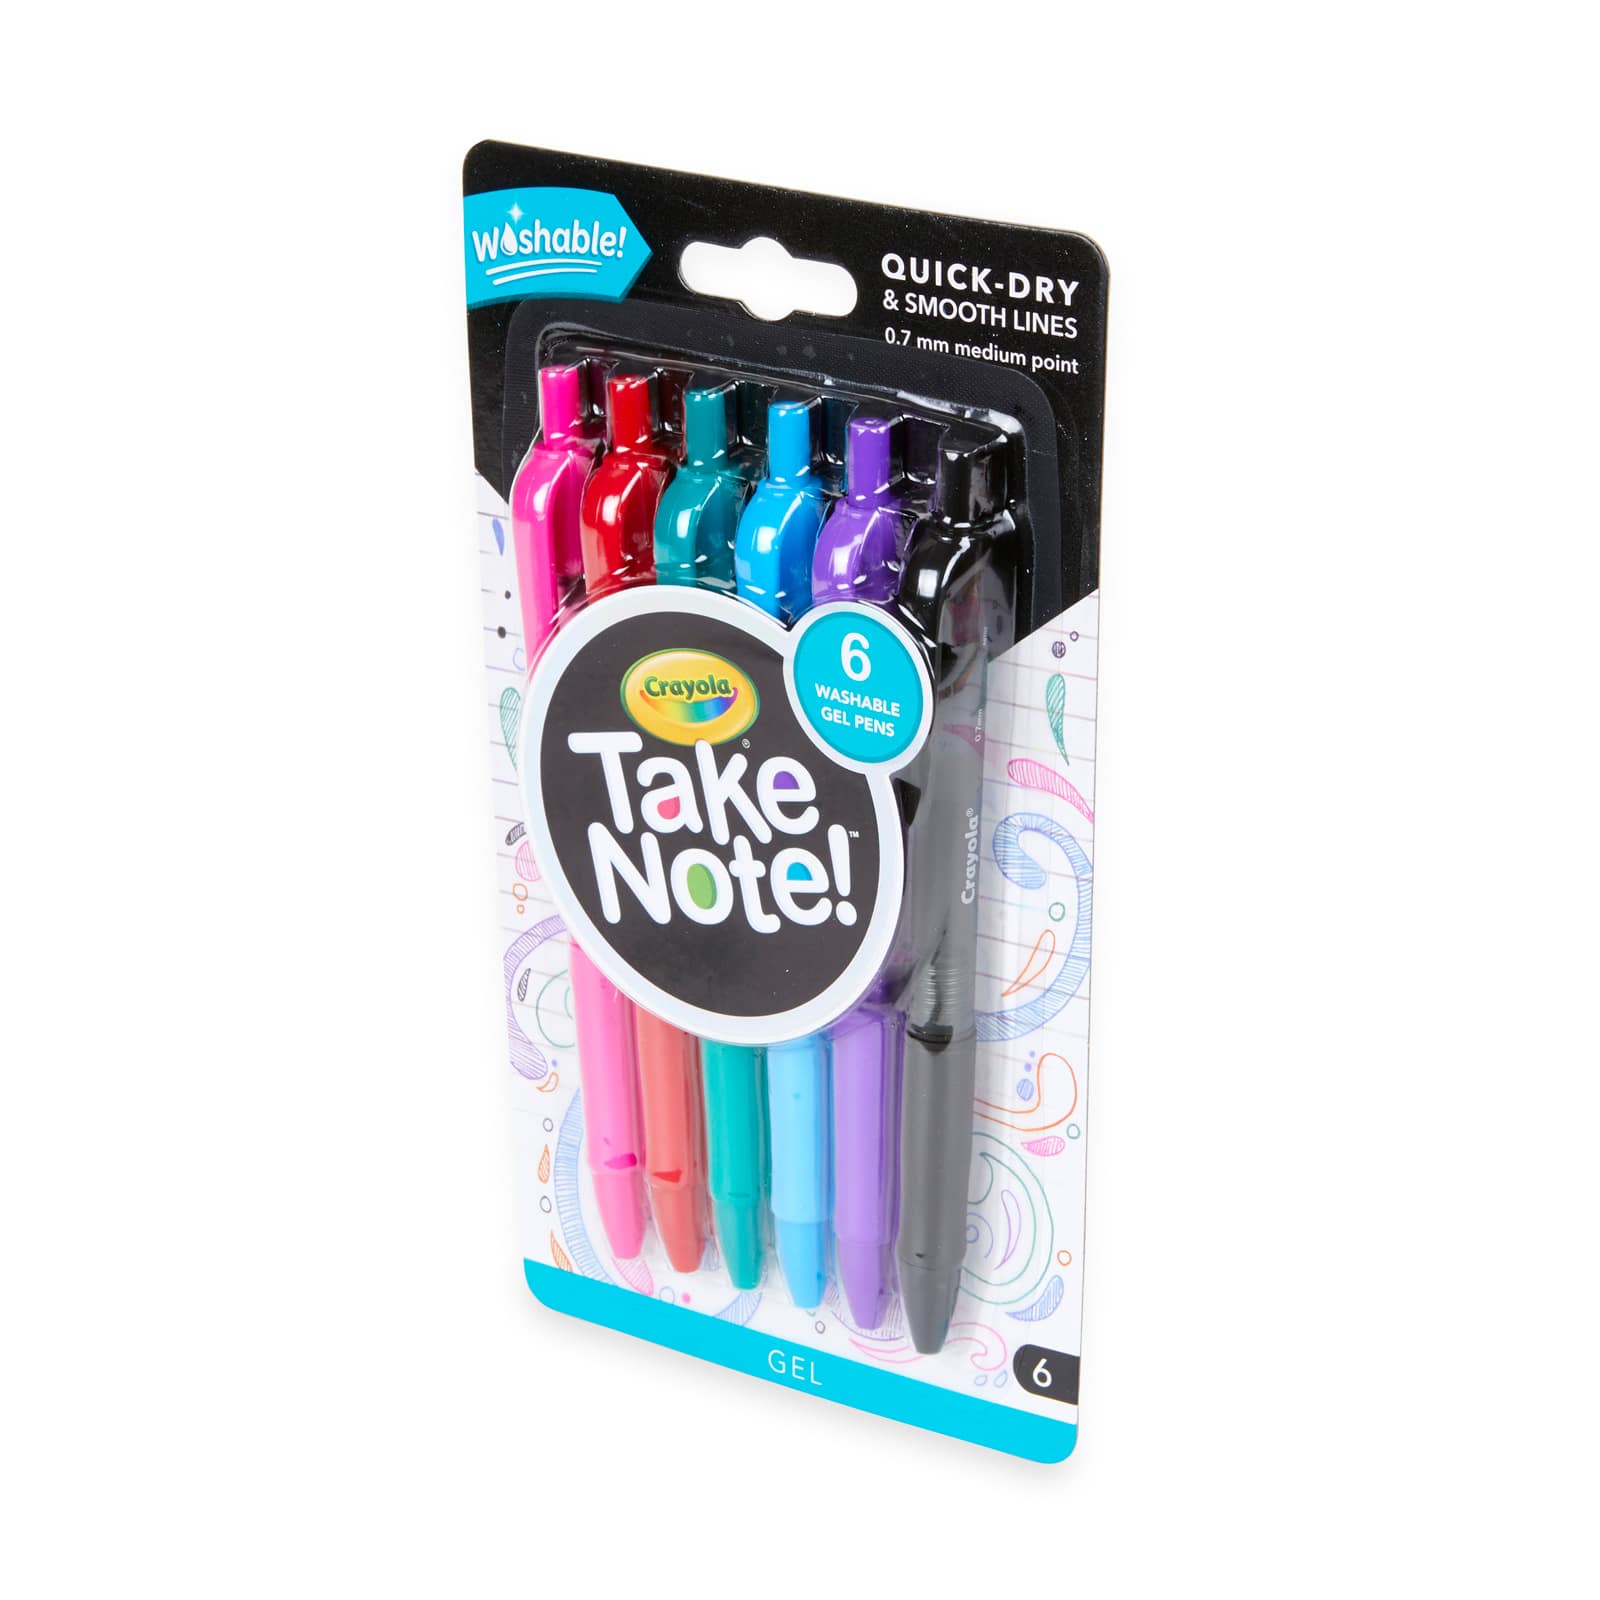 Crayola Take Note! Gel Pen, Washable, 0.7 mm, Medium Point - 6 pens